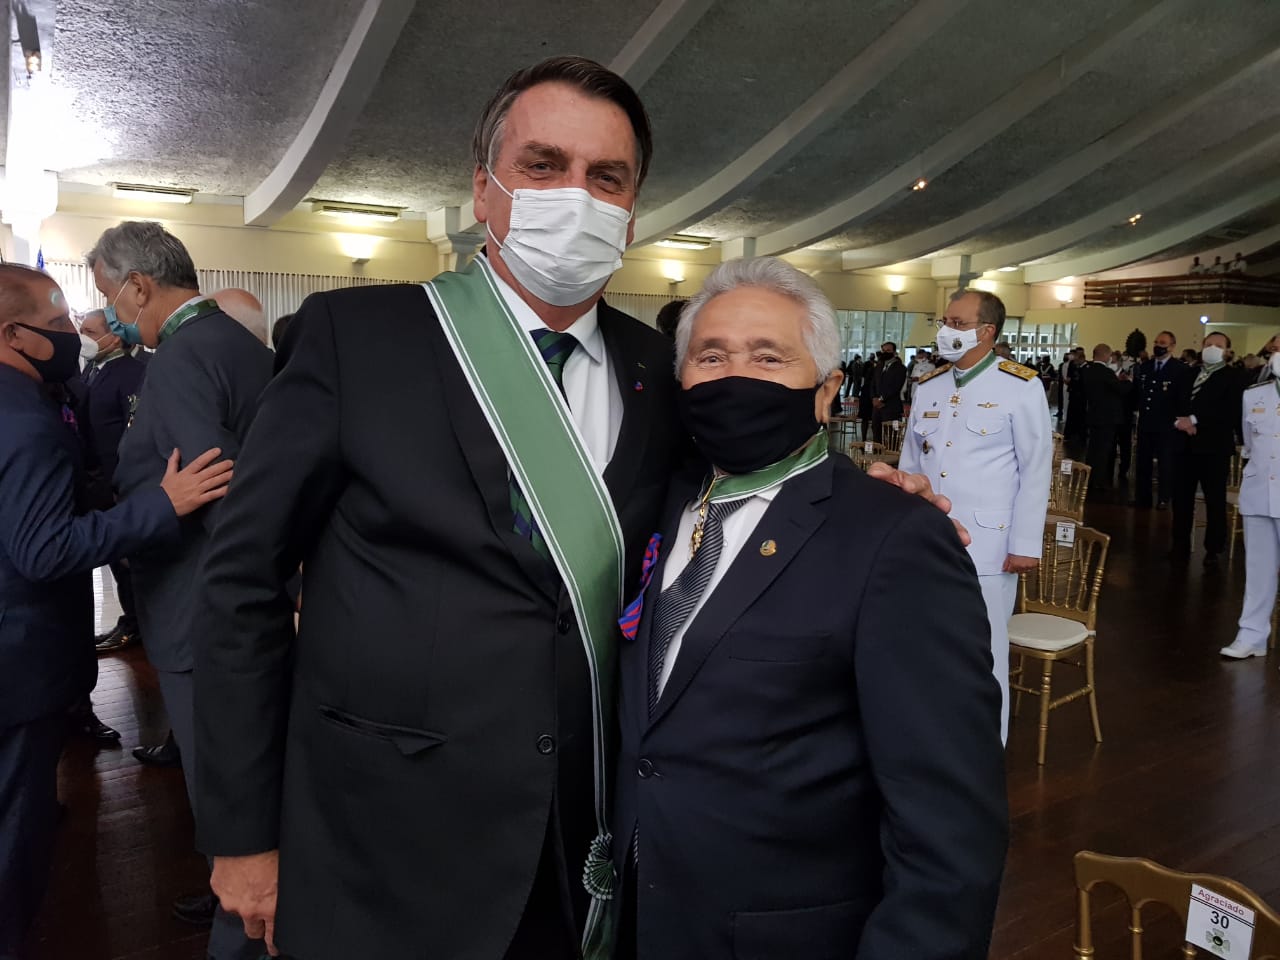 Senador Elmano Férrer e presidente Jair Bolsonaro.